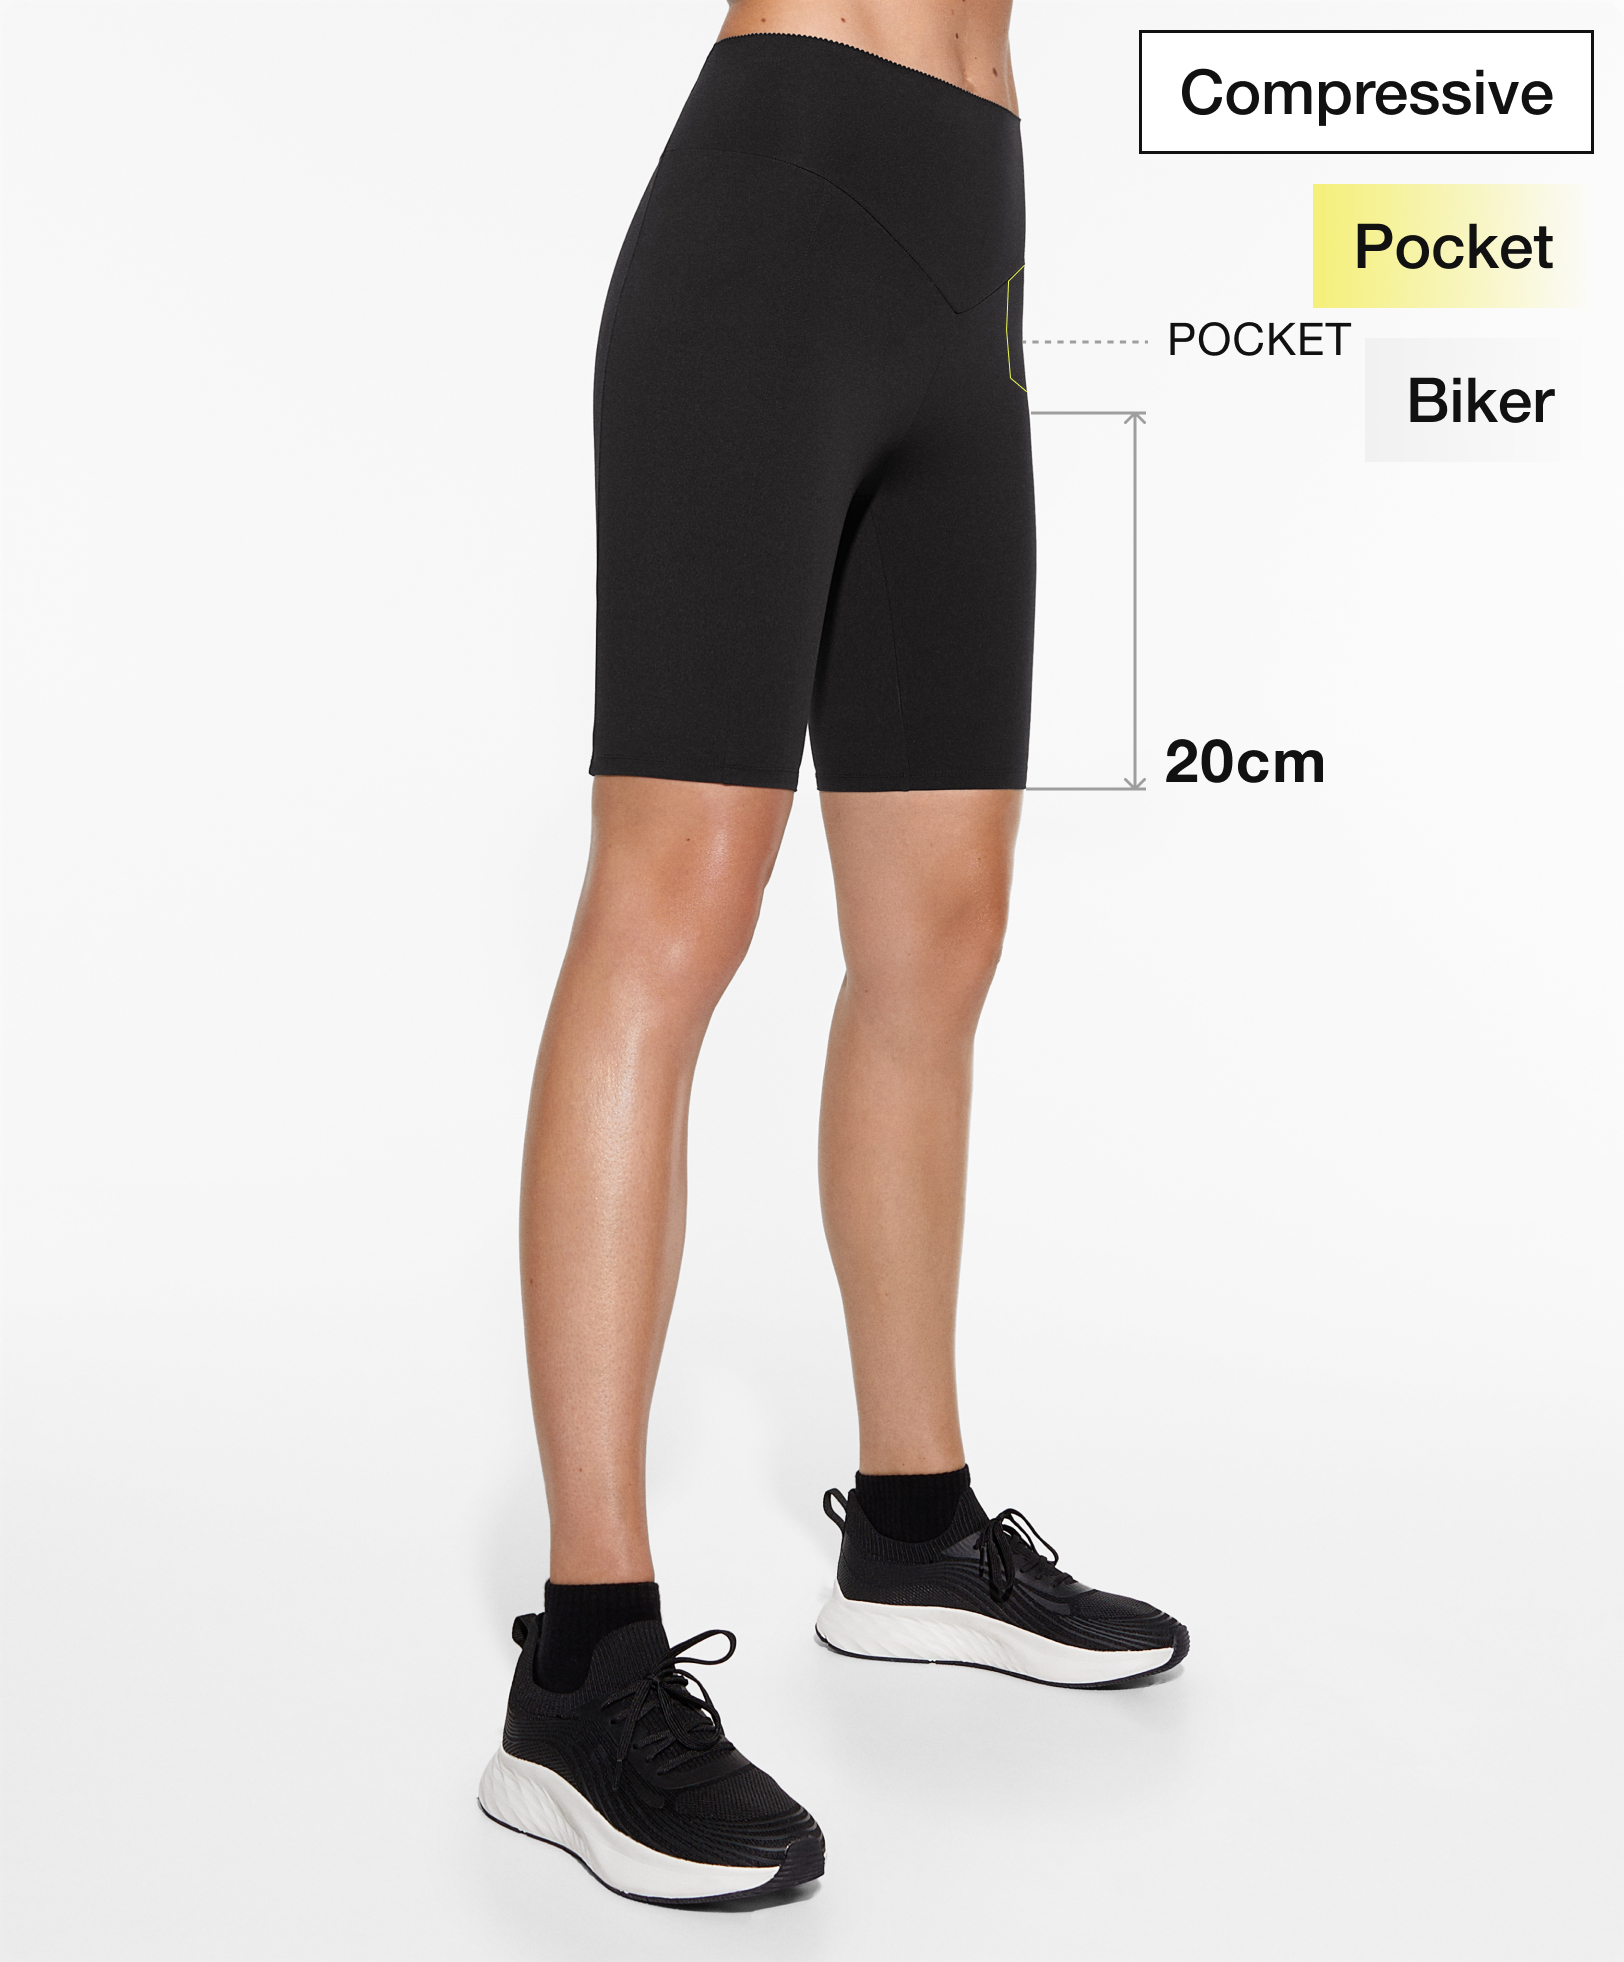 Compressive pocket 20cm cycle leggings